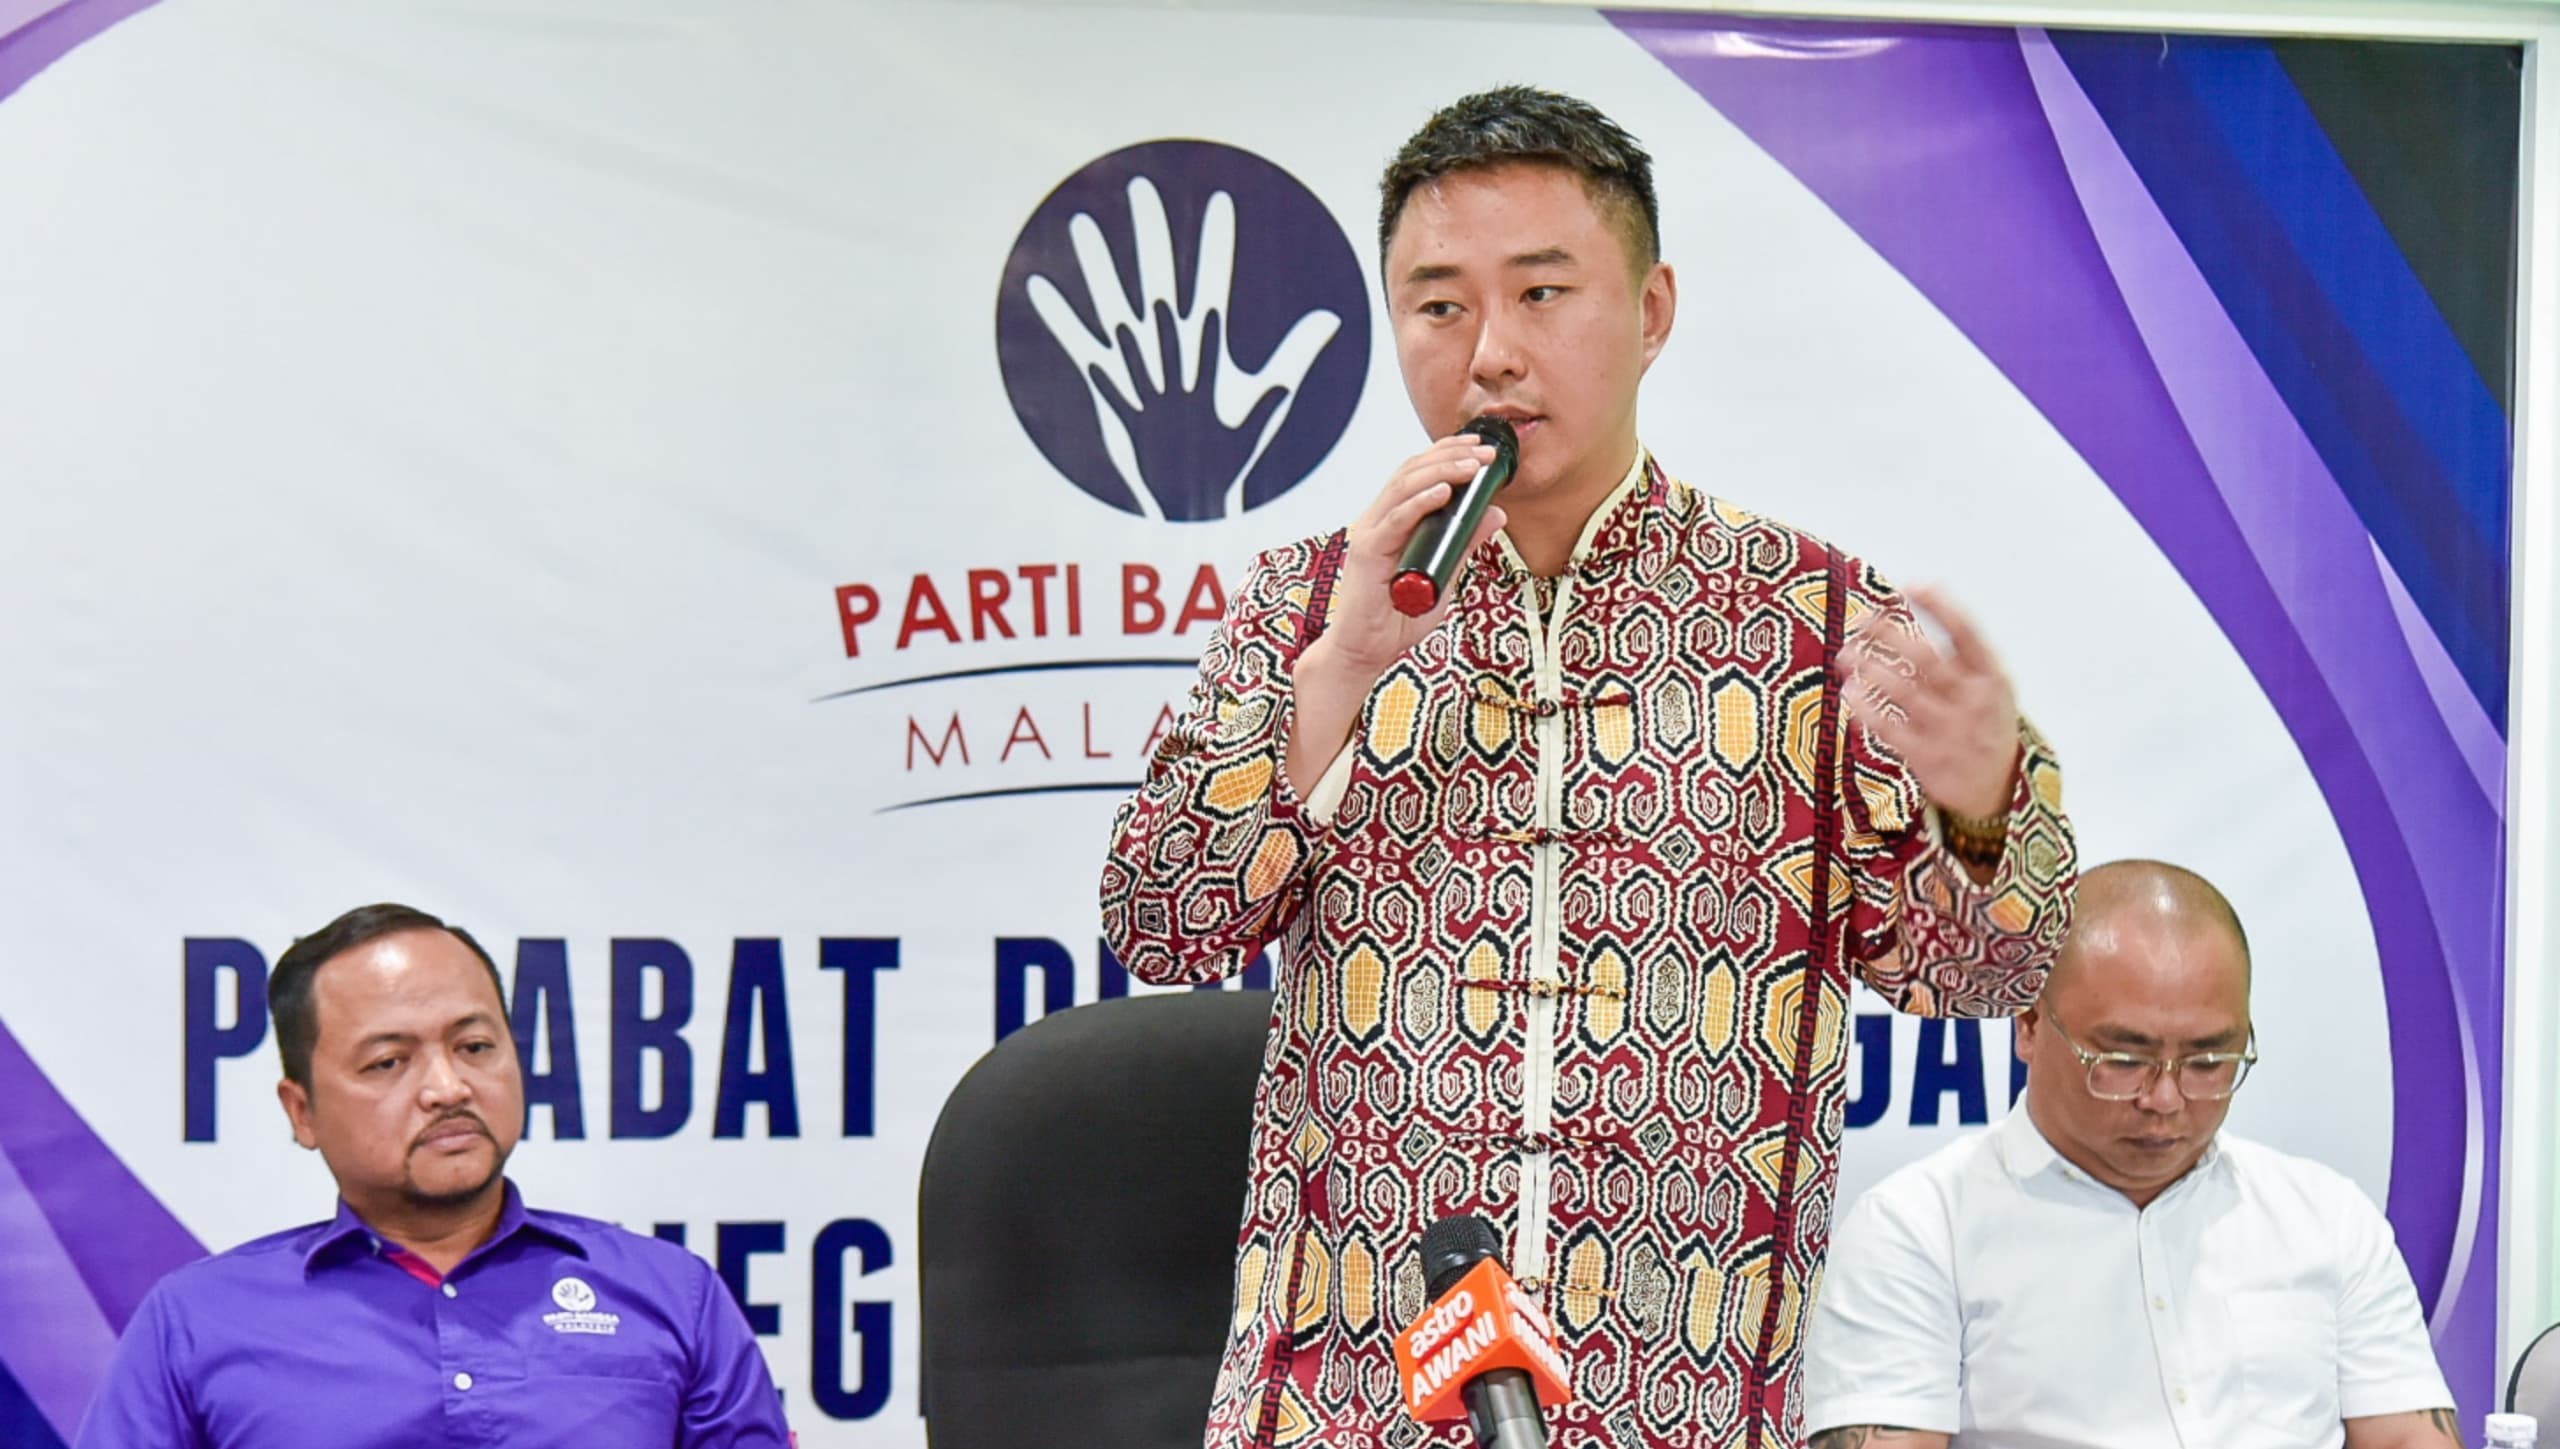 Parti Bangsa Malaysia to contest in upcoming Sabah polls, eyeing KDM seats